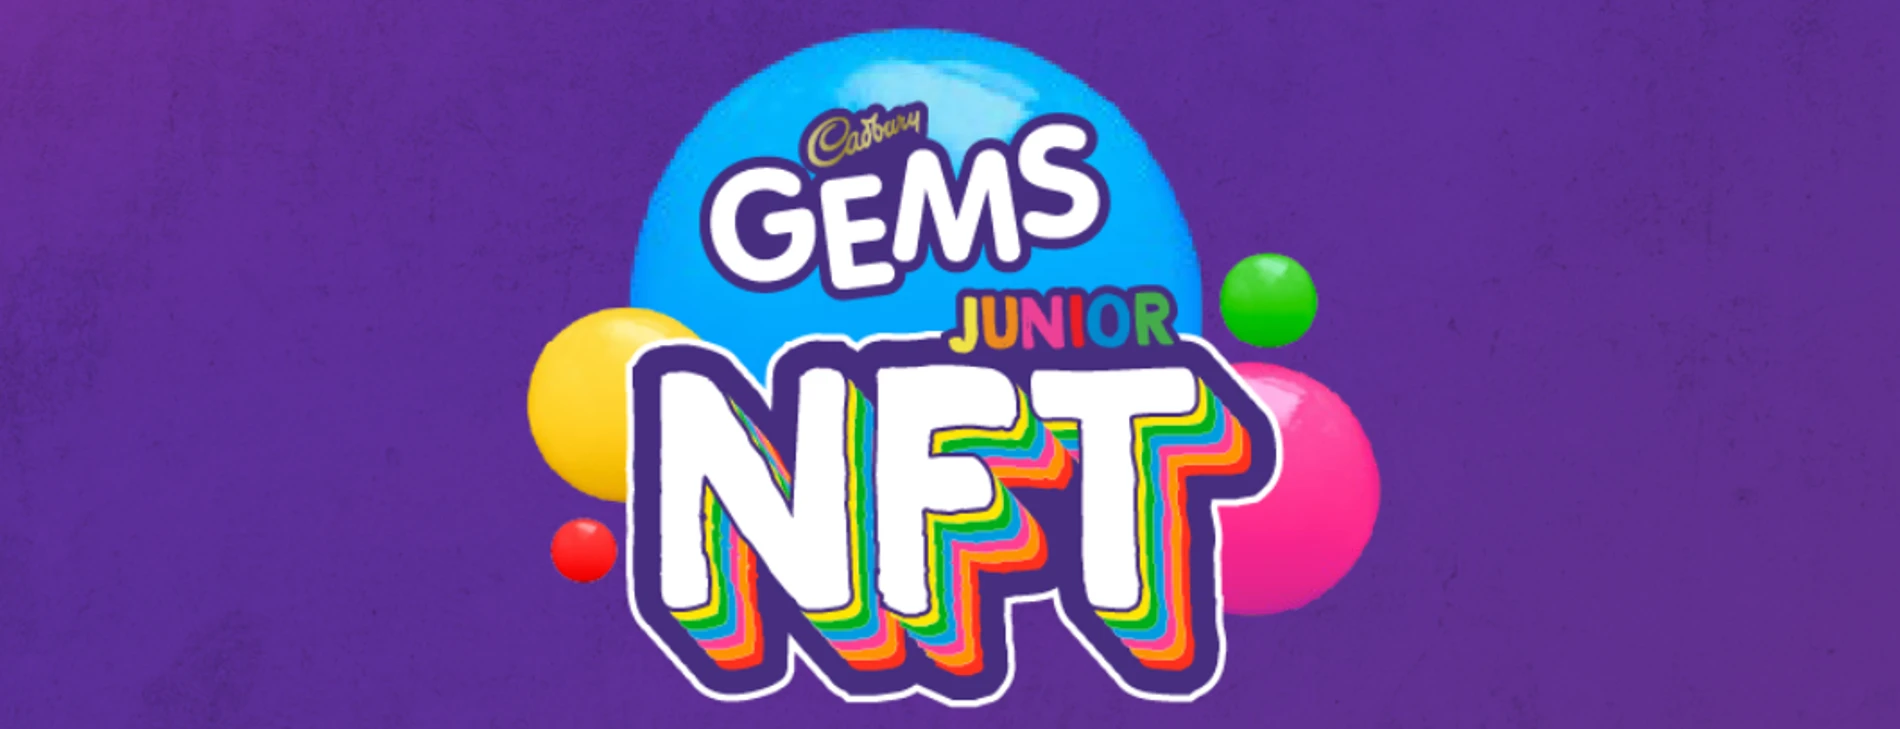 Cadbury Gems Junior NFT